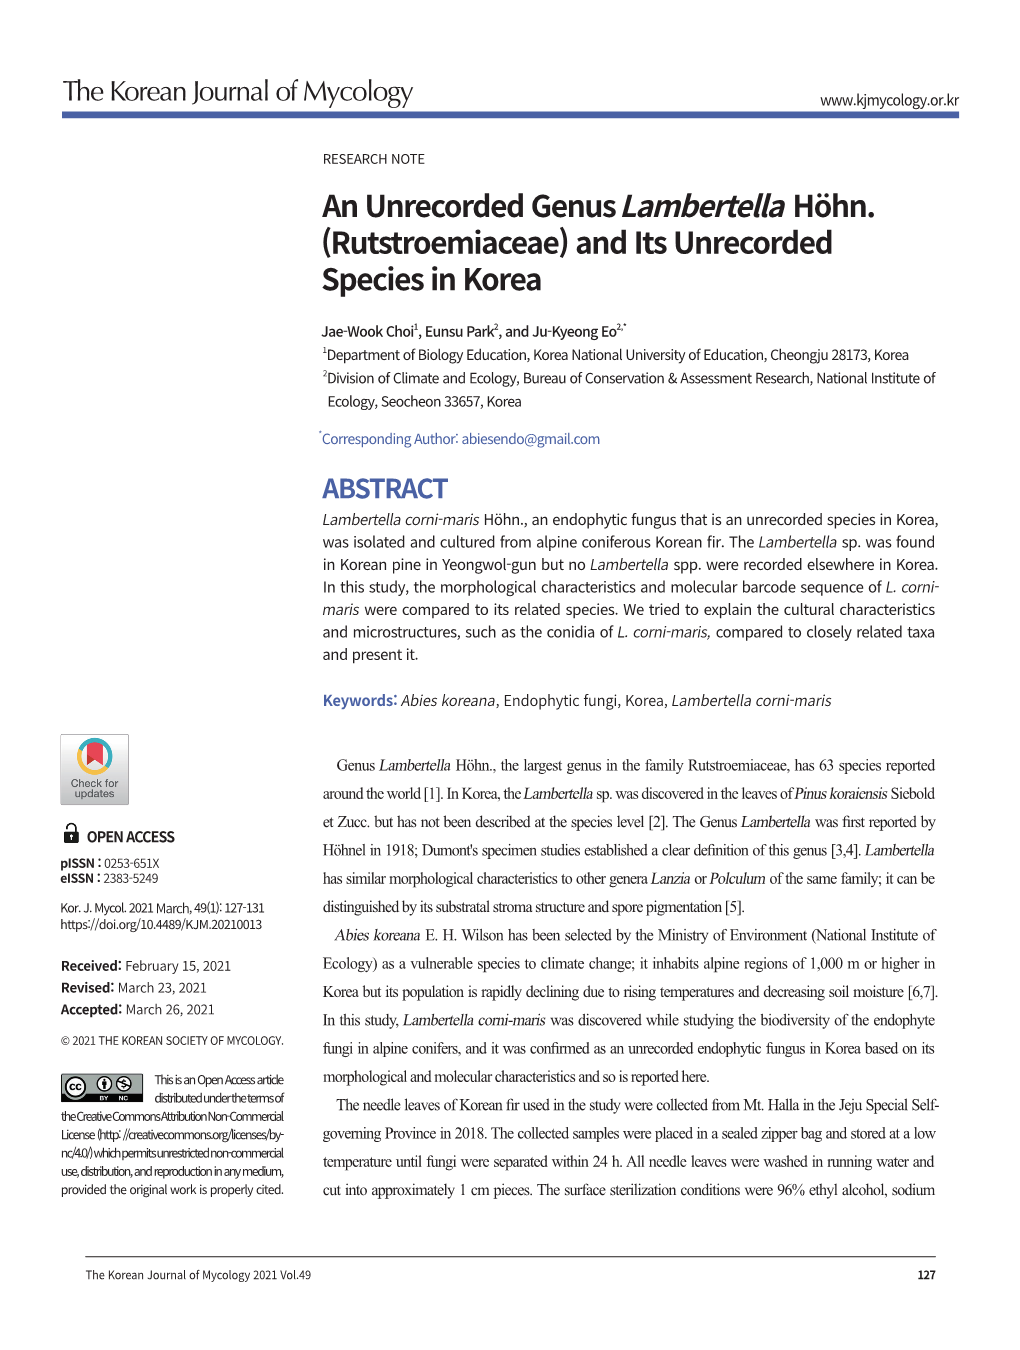 An Unrecorded Genus Lambertella Höhn. (Rutstroemiaceae) and Its Unrecorded Species in Korea